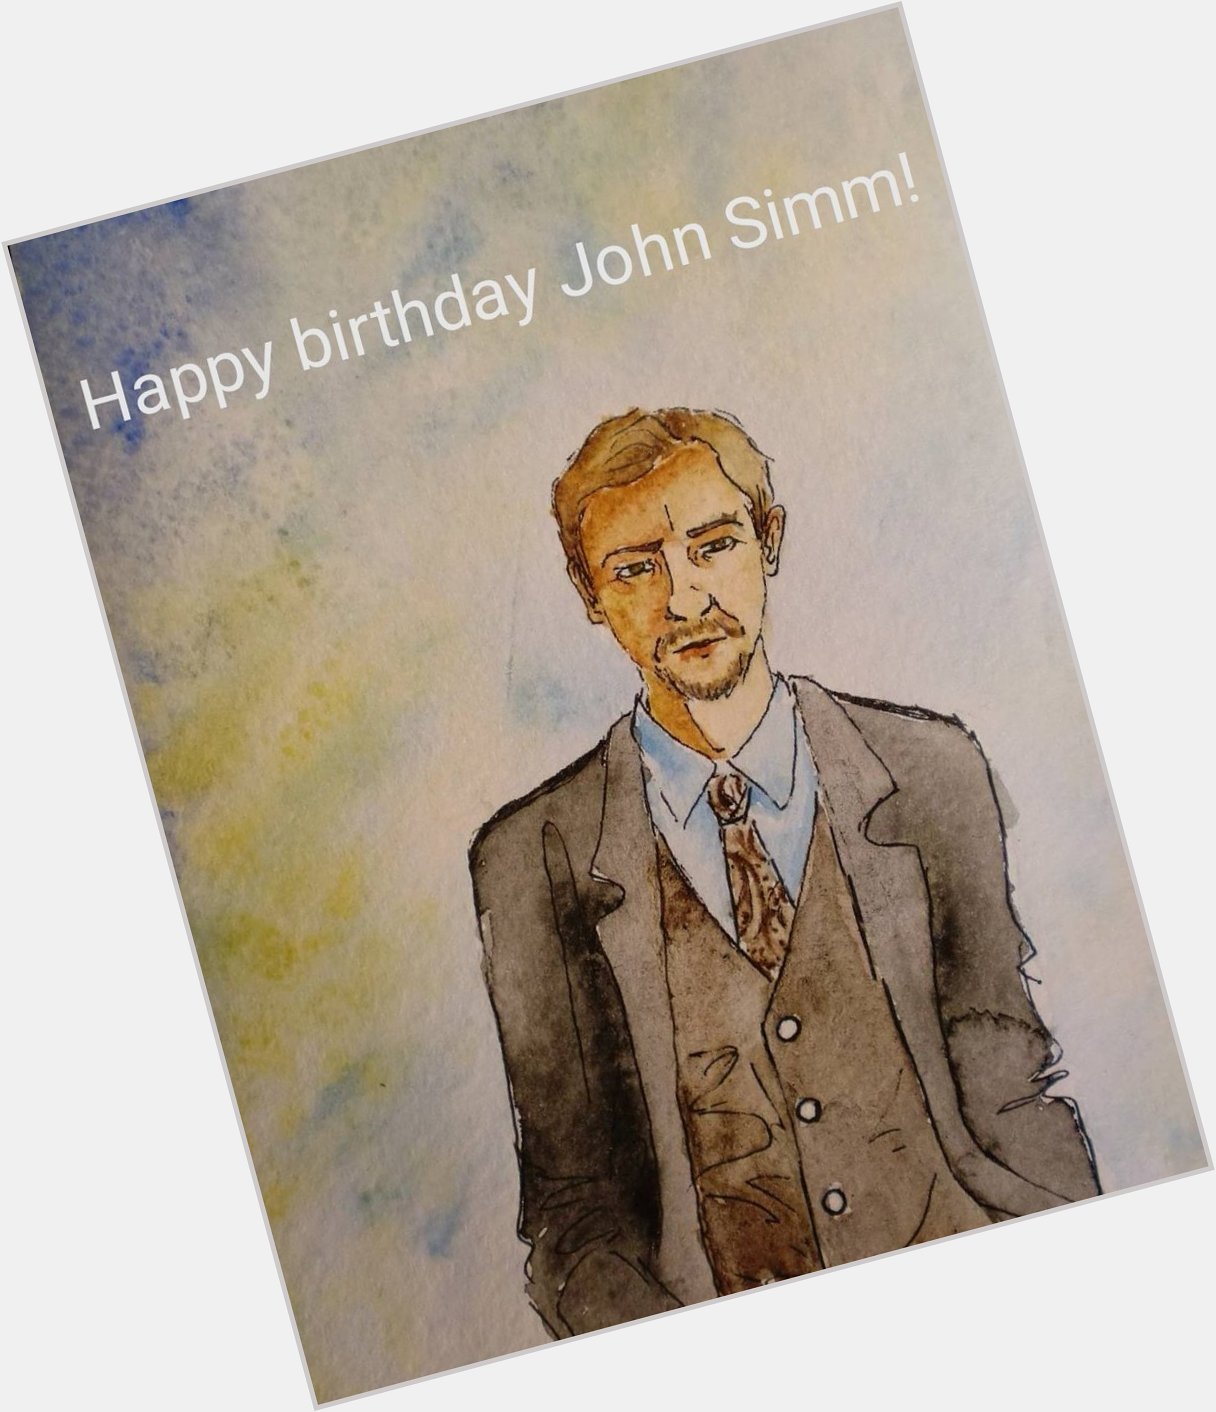 Happy birthday John Simm! 